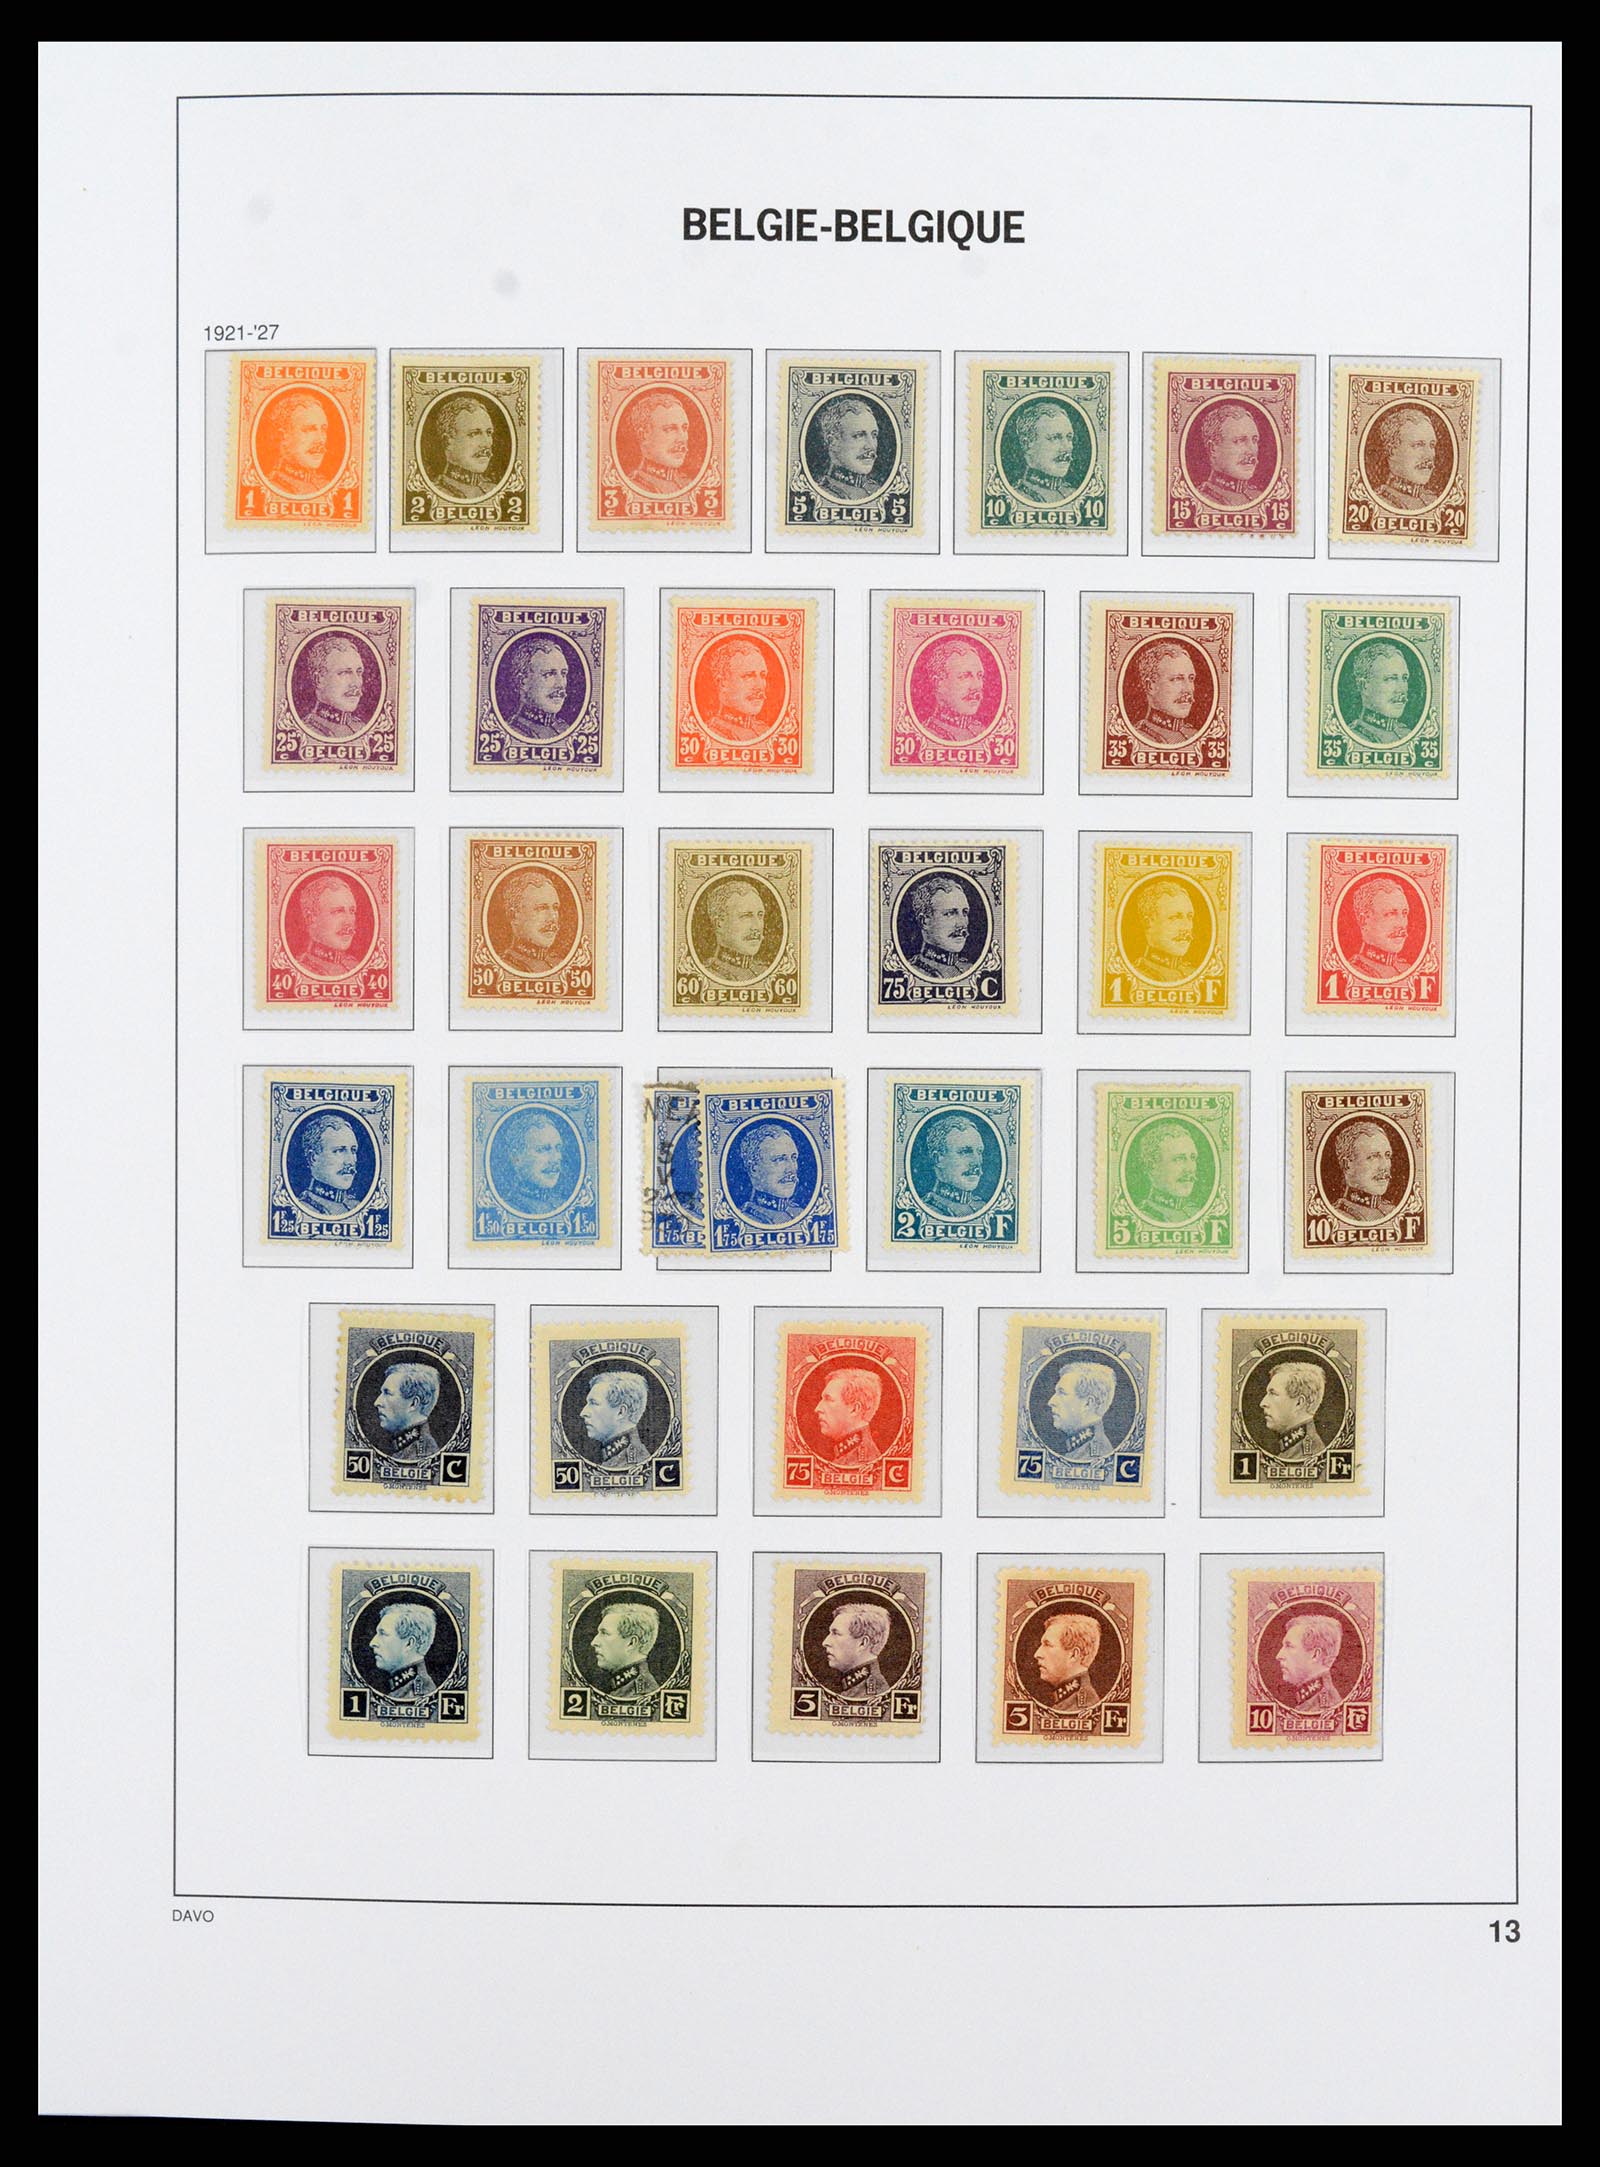 38073 011 - Stamp collection 38073 Belgium 1849-1950.